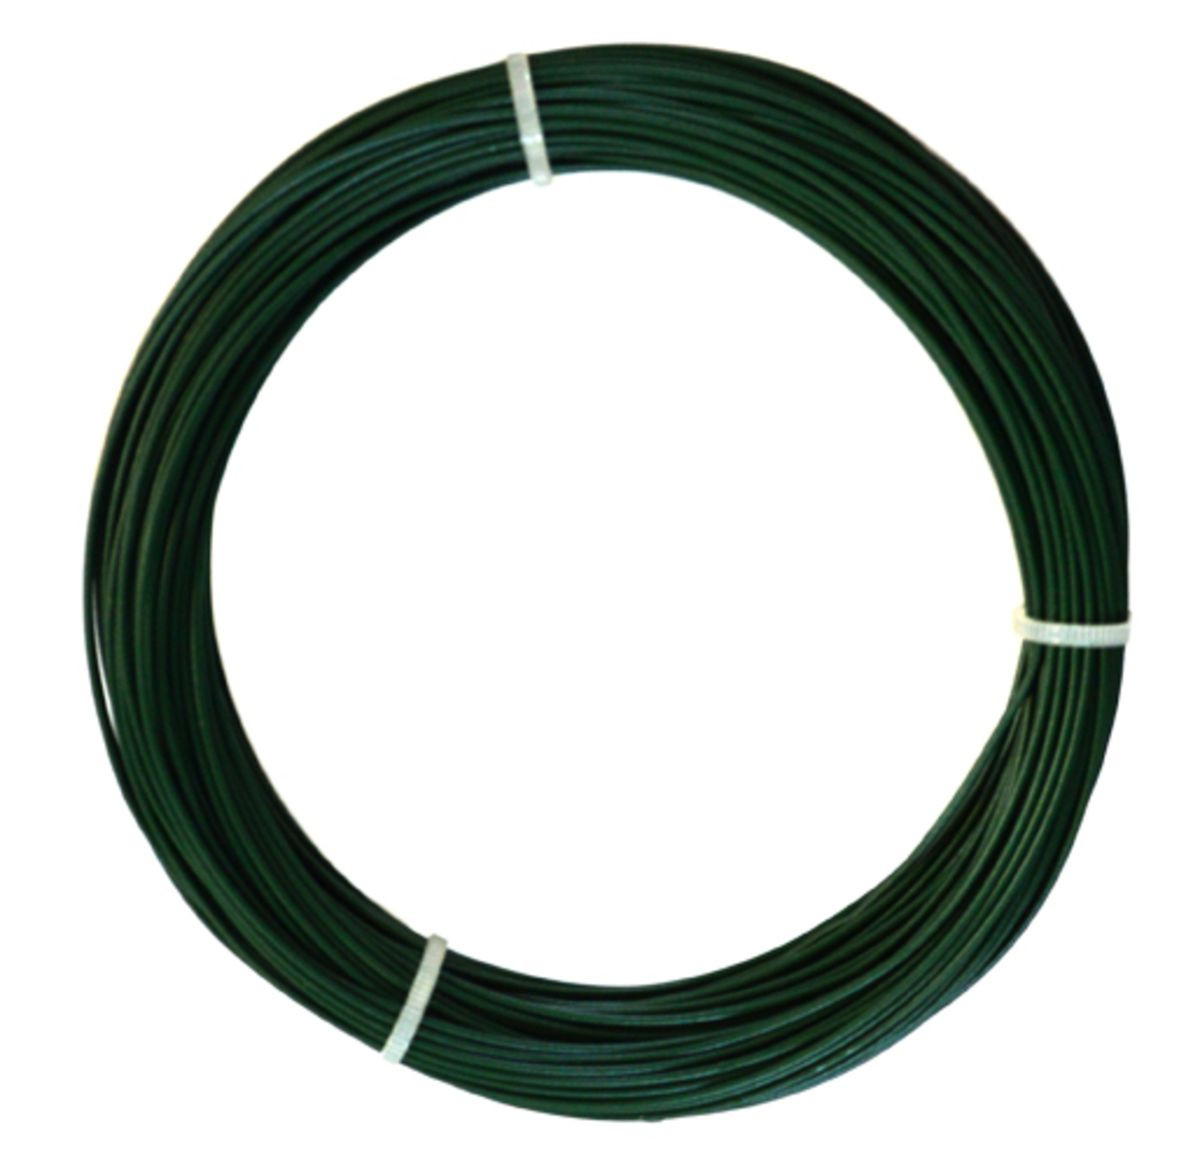 Fil de fer plastifié "Plast Wire" - 3 mm x 25 m